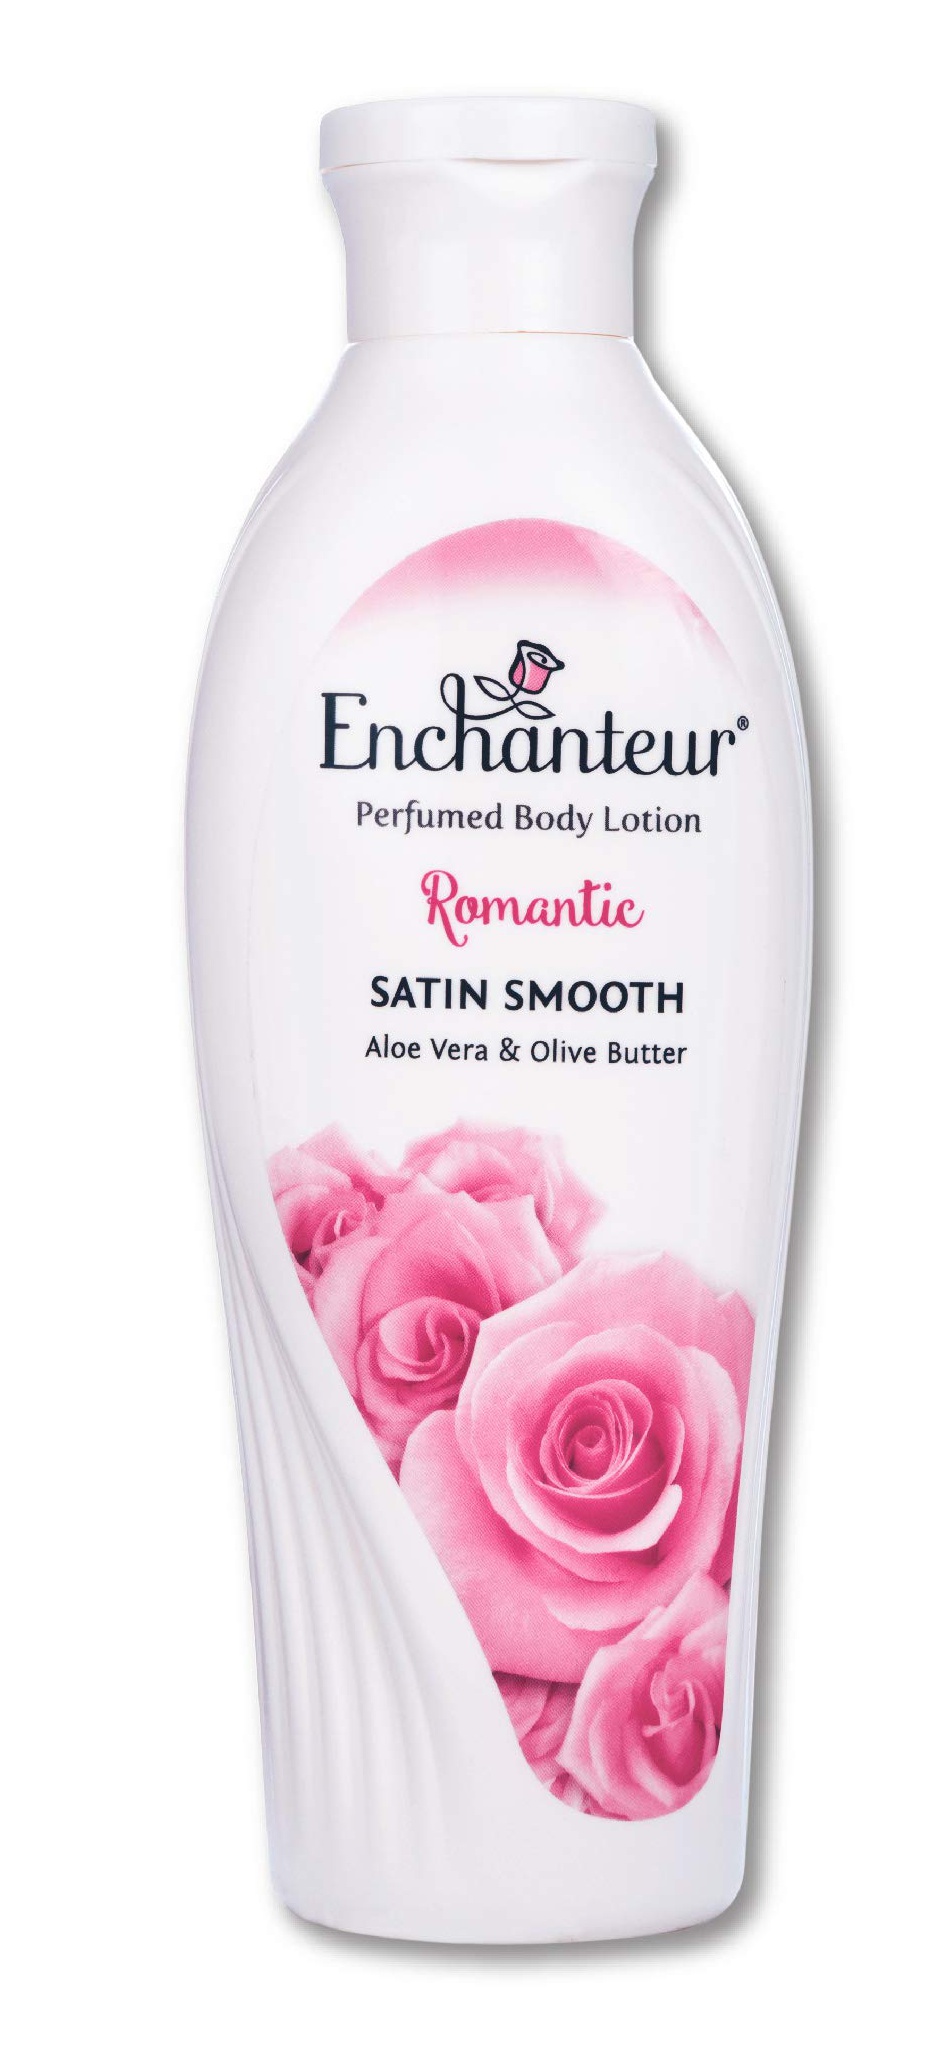 Enchanteur Perfumed Body Lotion Romantic Satin Smooth Aloe Vera & Olive Butter